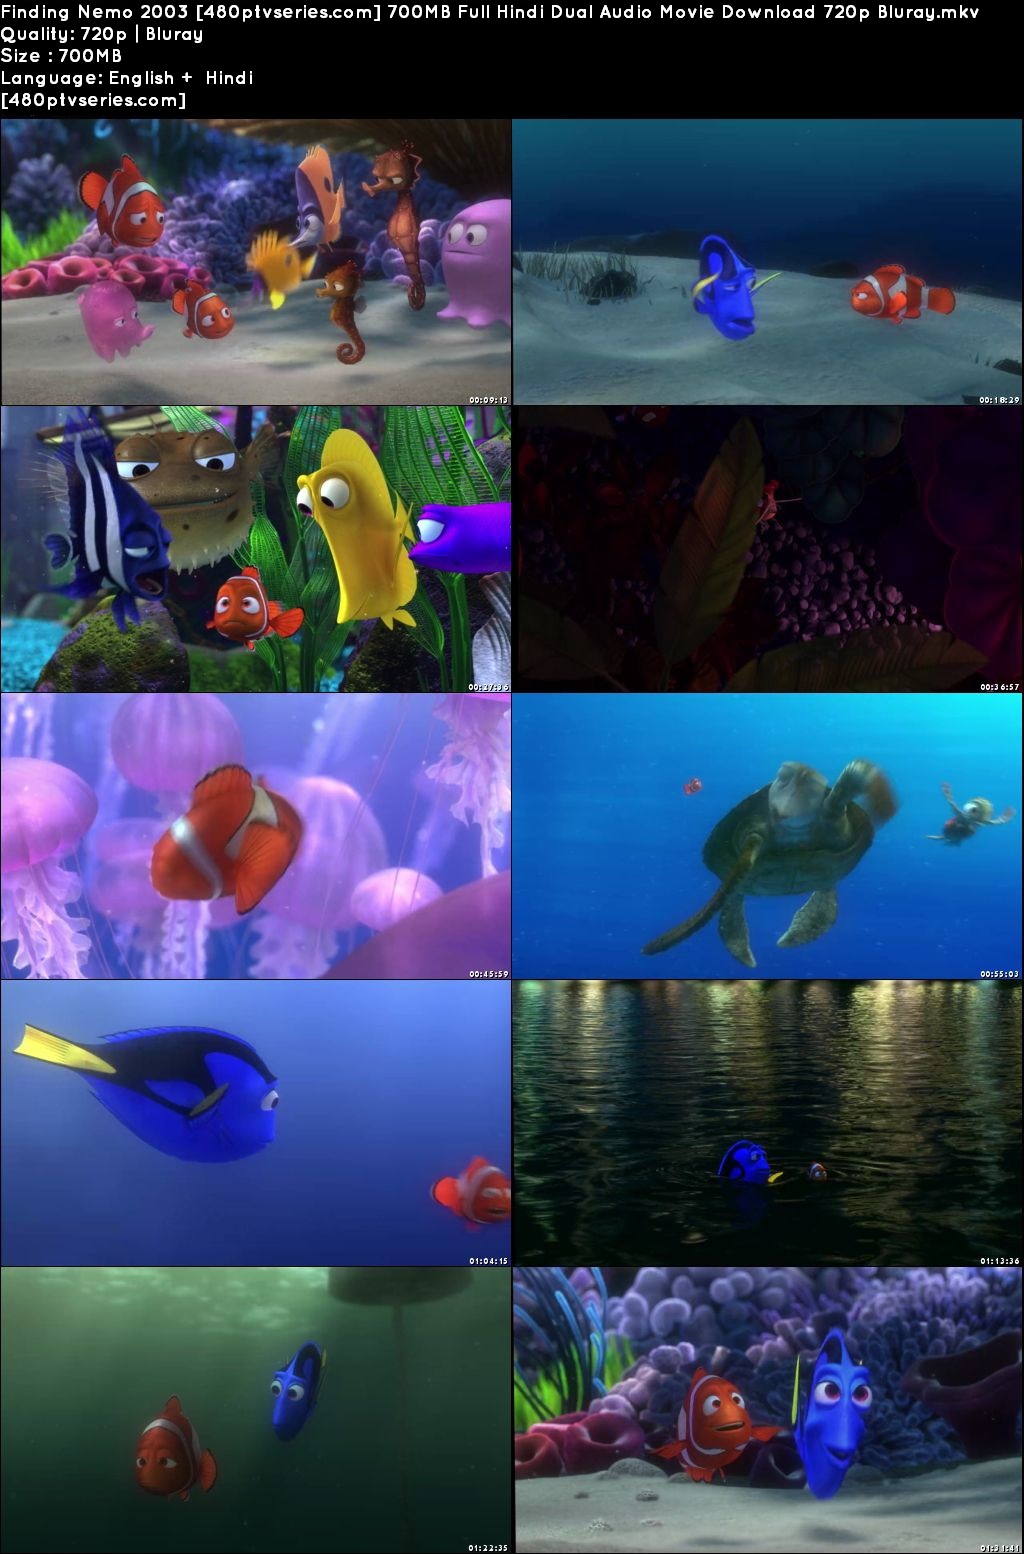 Finding Nemo 2003 700MB Full Hindi Dual Audio Movie Download 720p Bluray